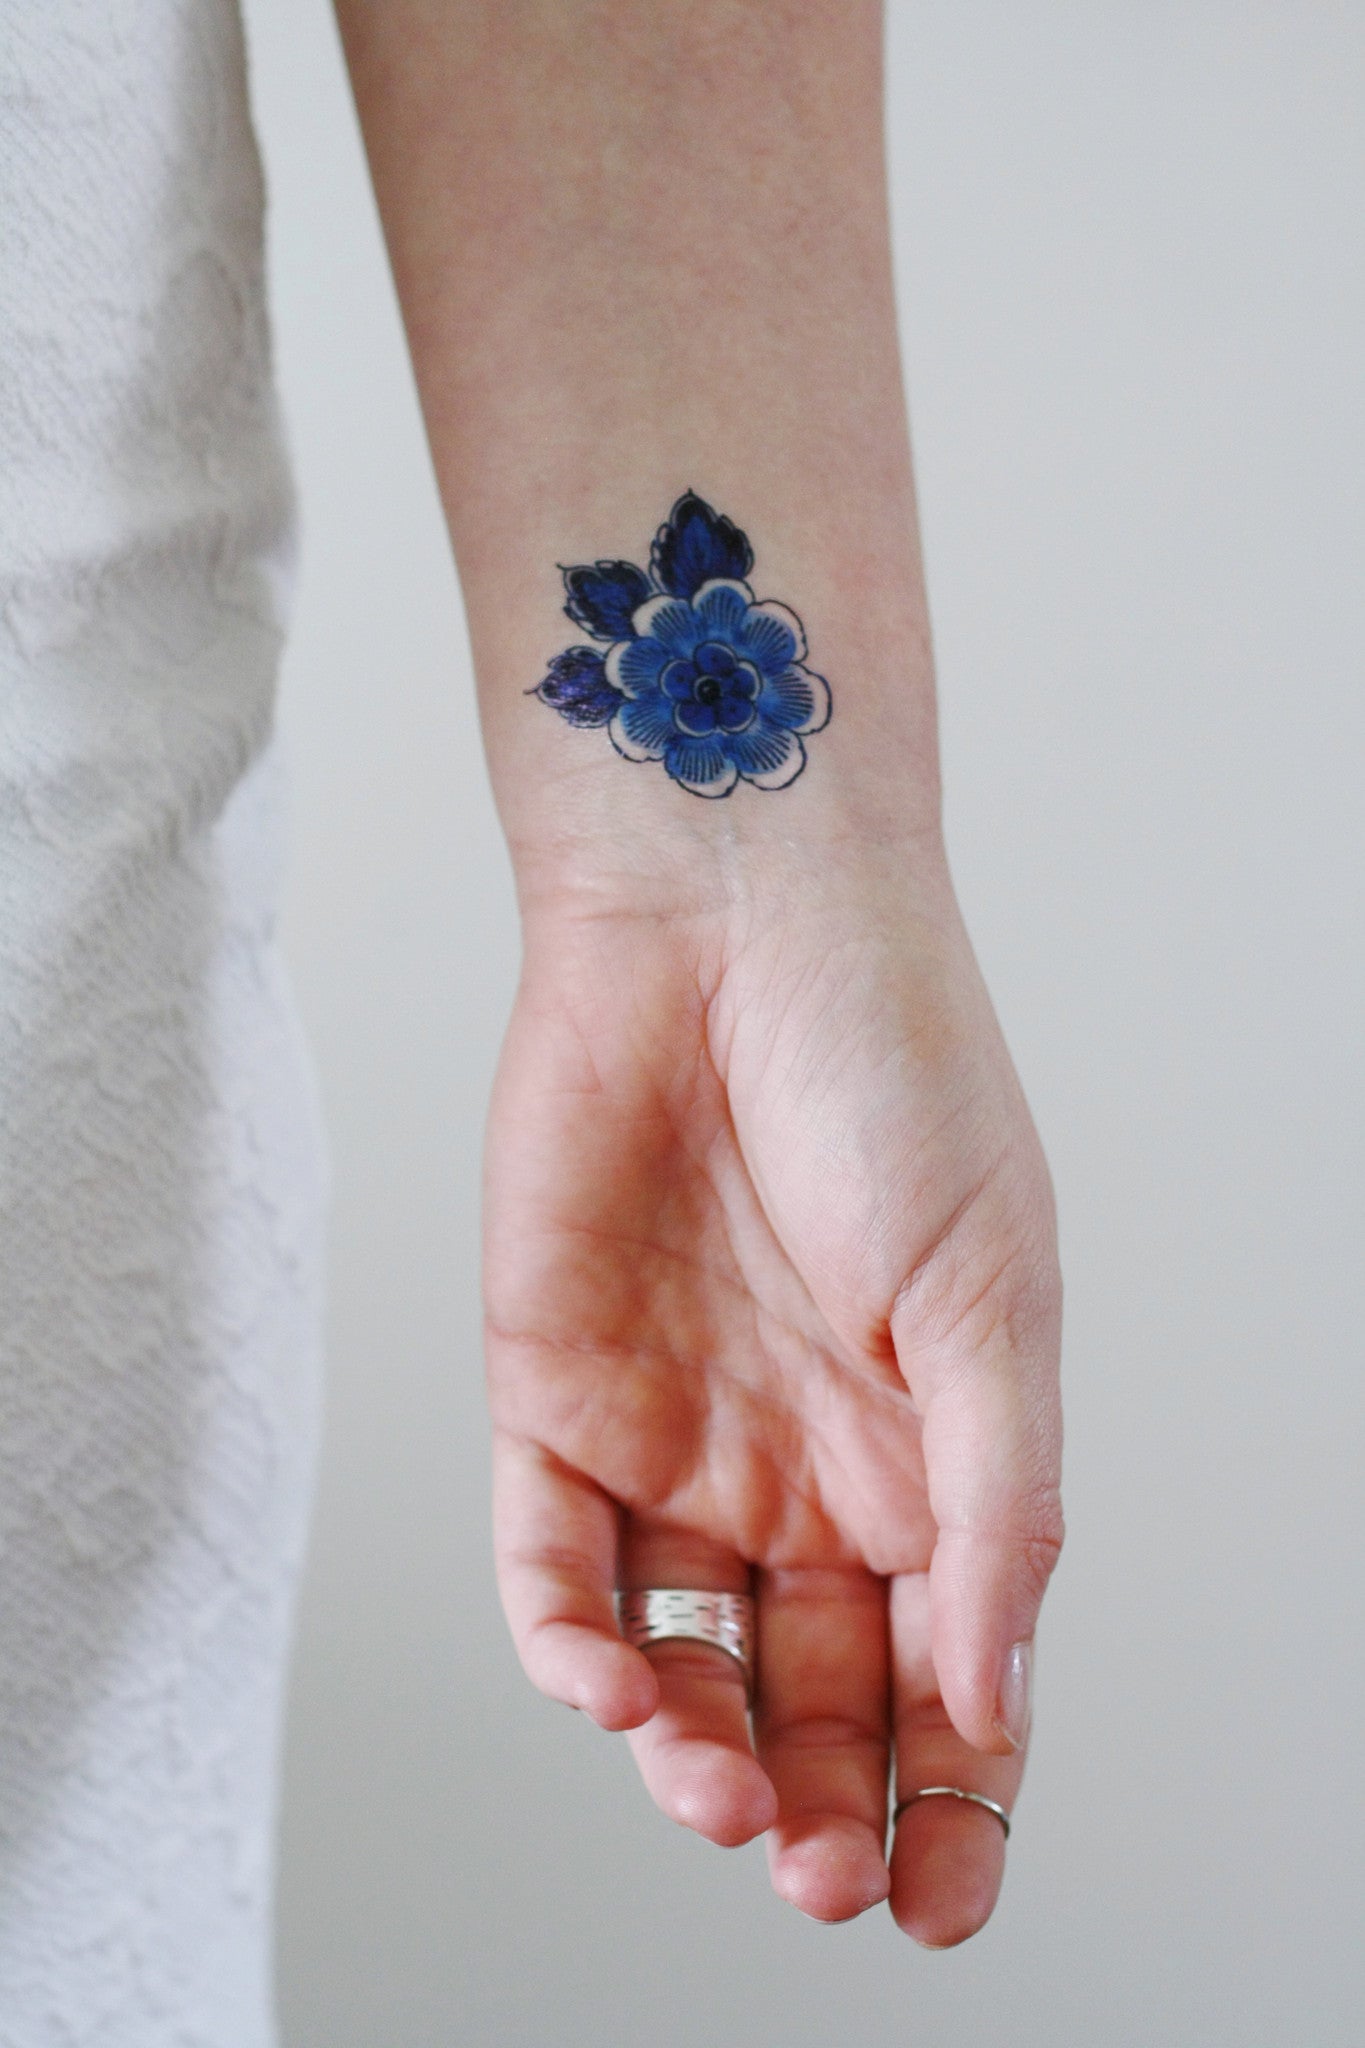 flower tattoo blue